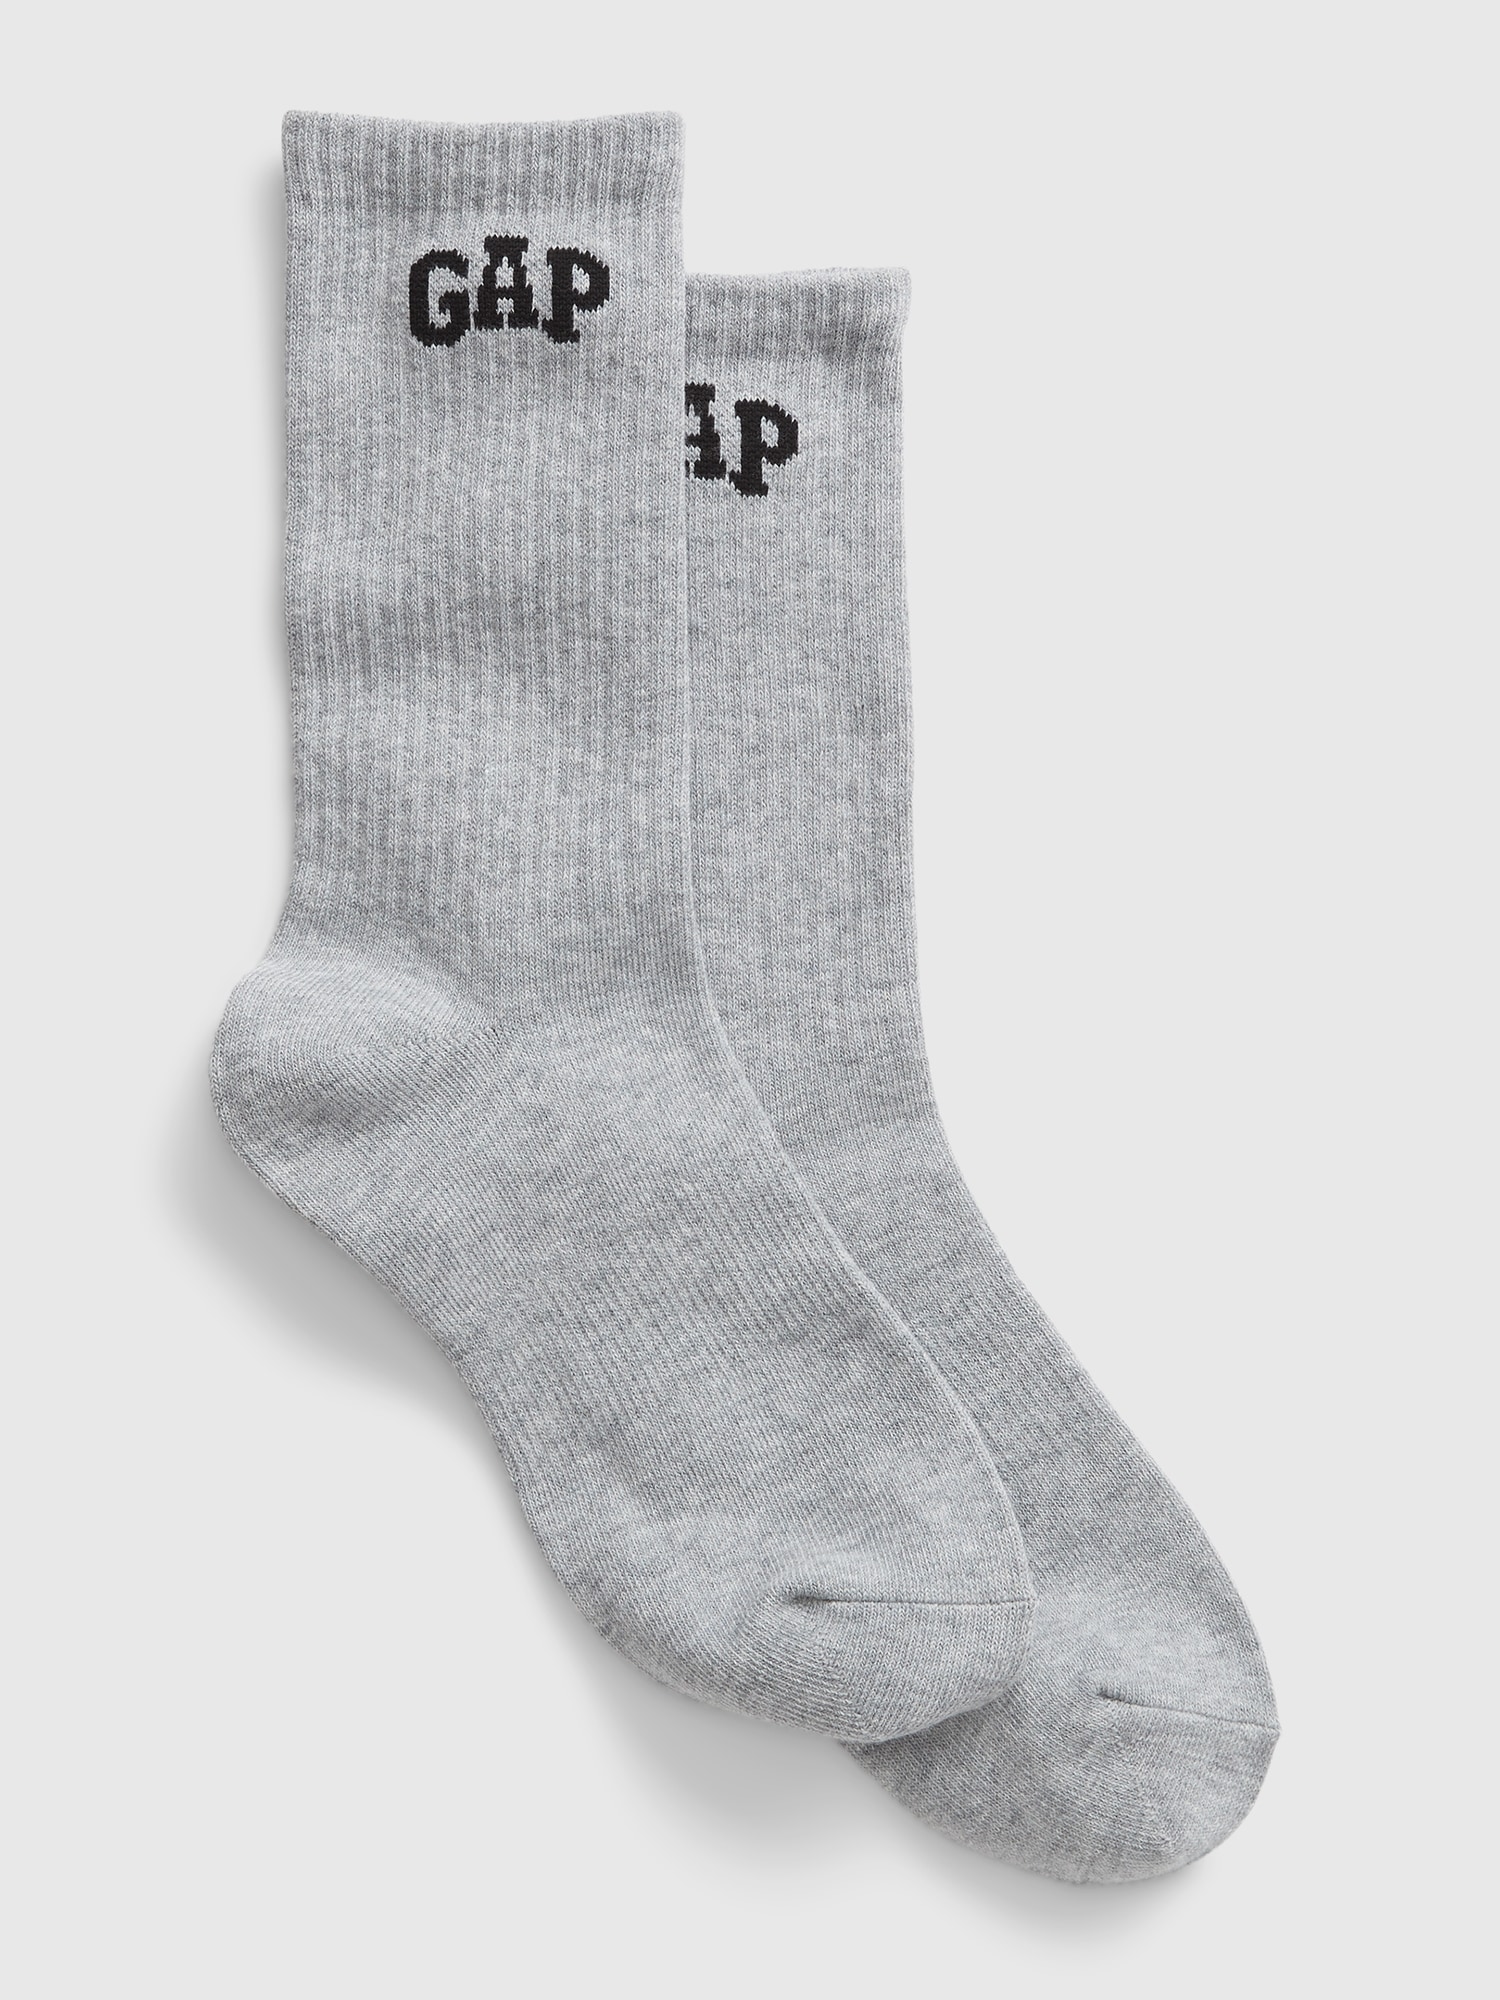 Gap Quarter Crew Socks gray. 1